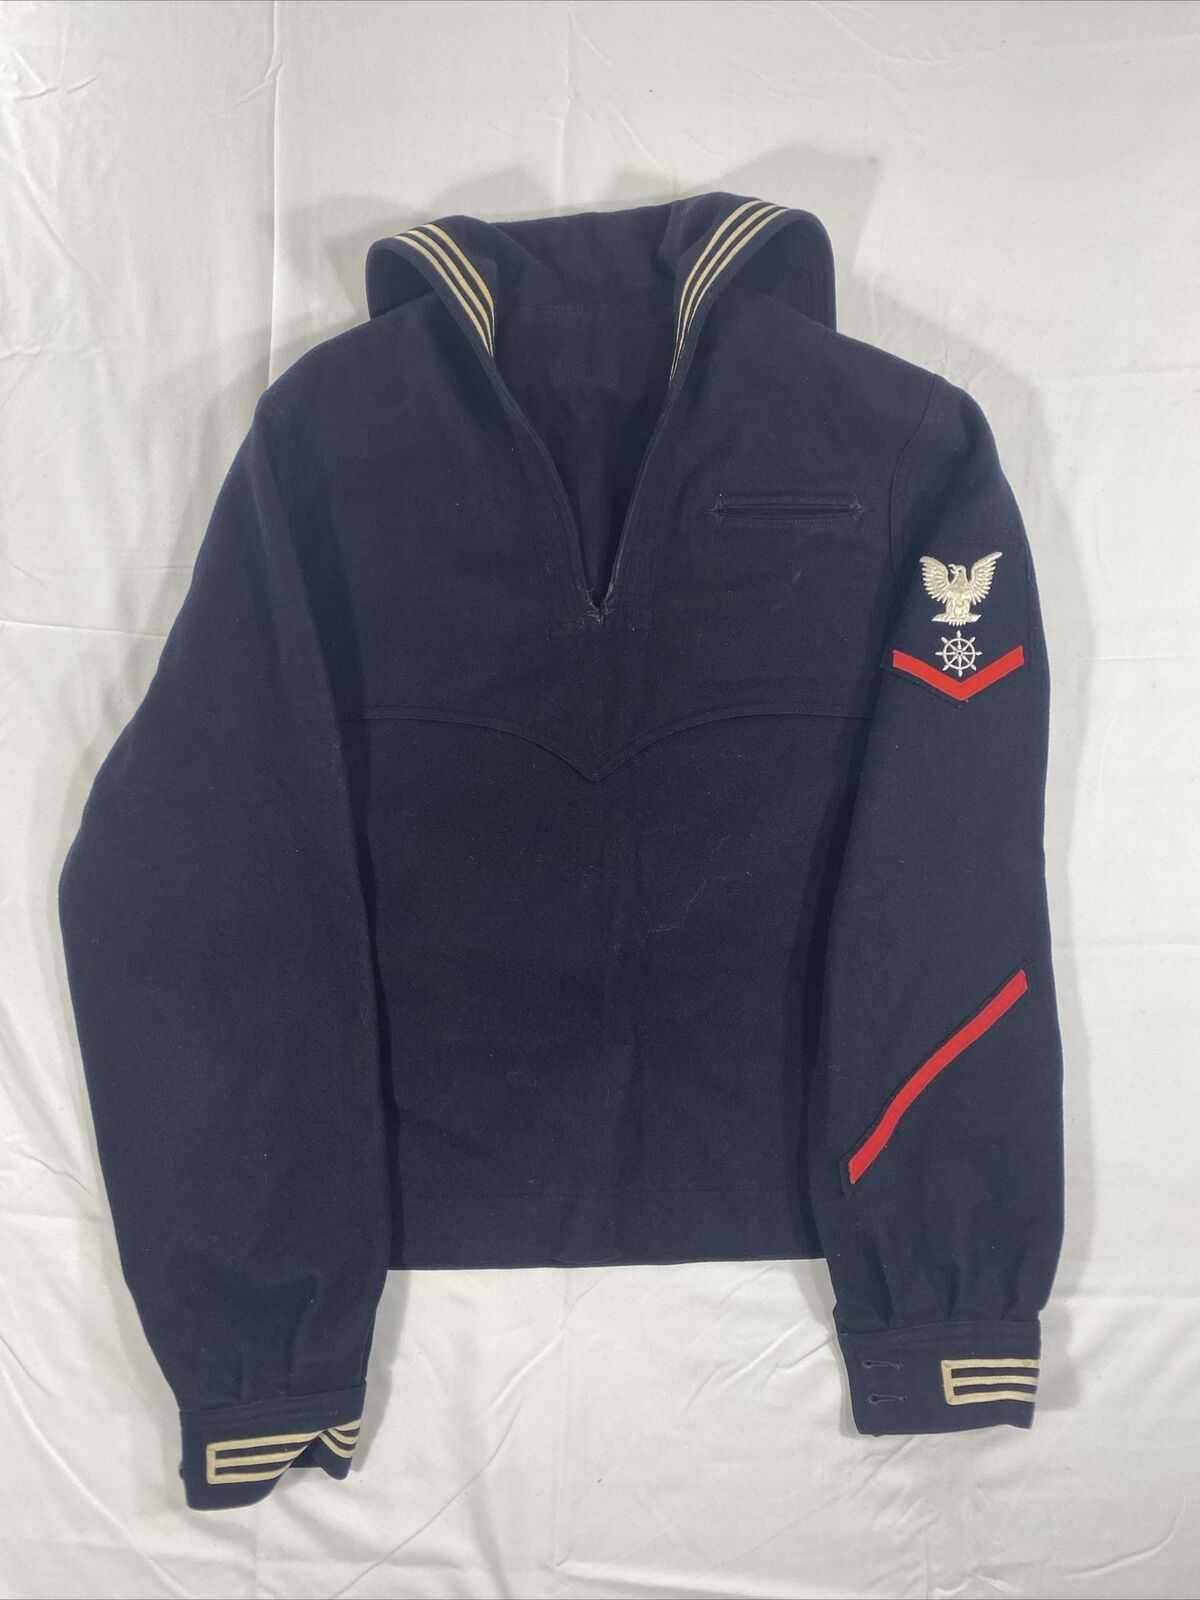 Vintage US NAVY Uniform Top Mens Cracker Jack Sailor 100% Wool Jacket Naval